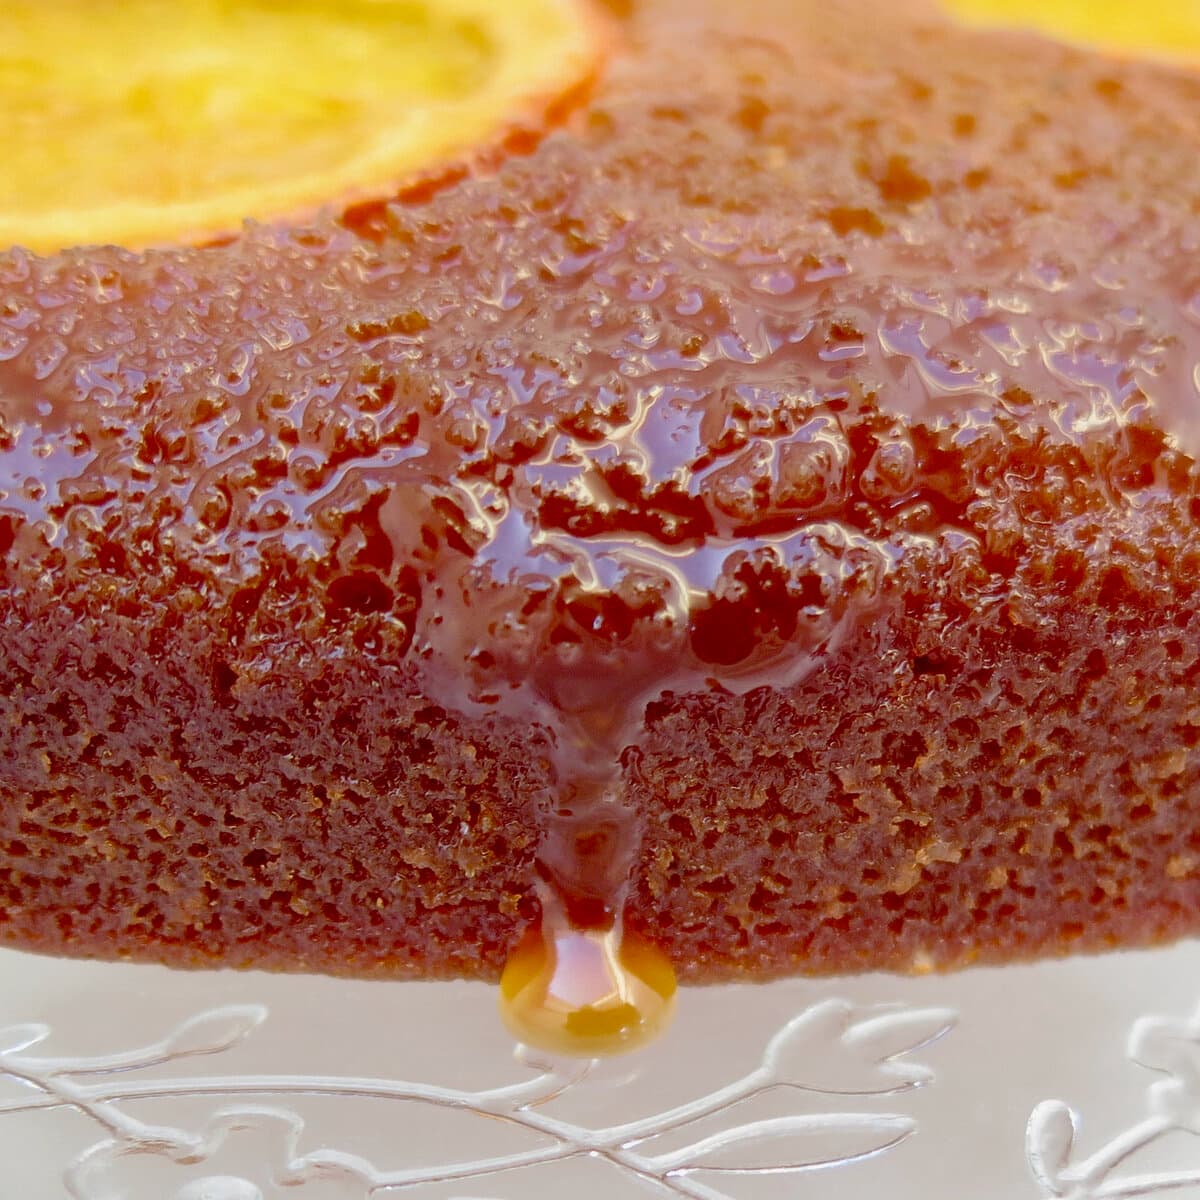 caramel oozing out of an orange cake